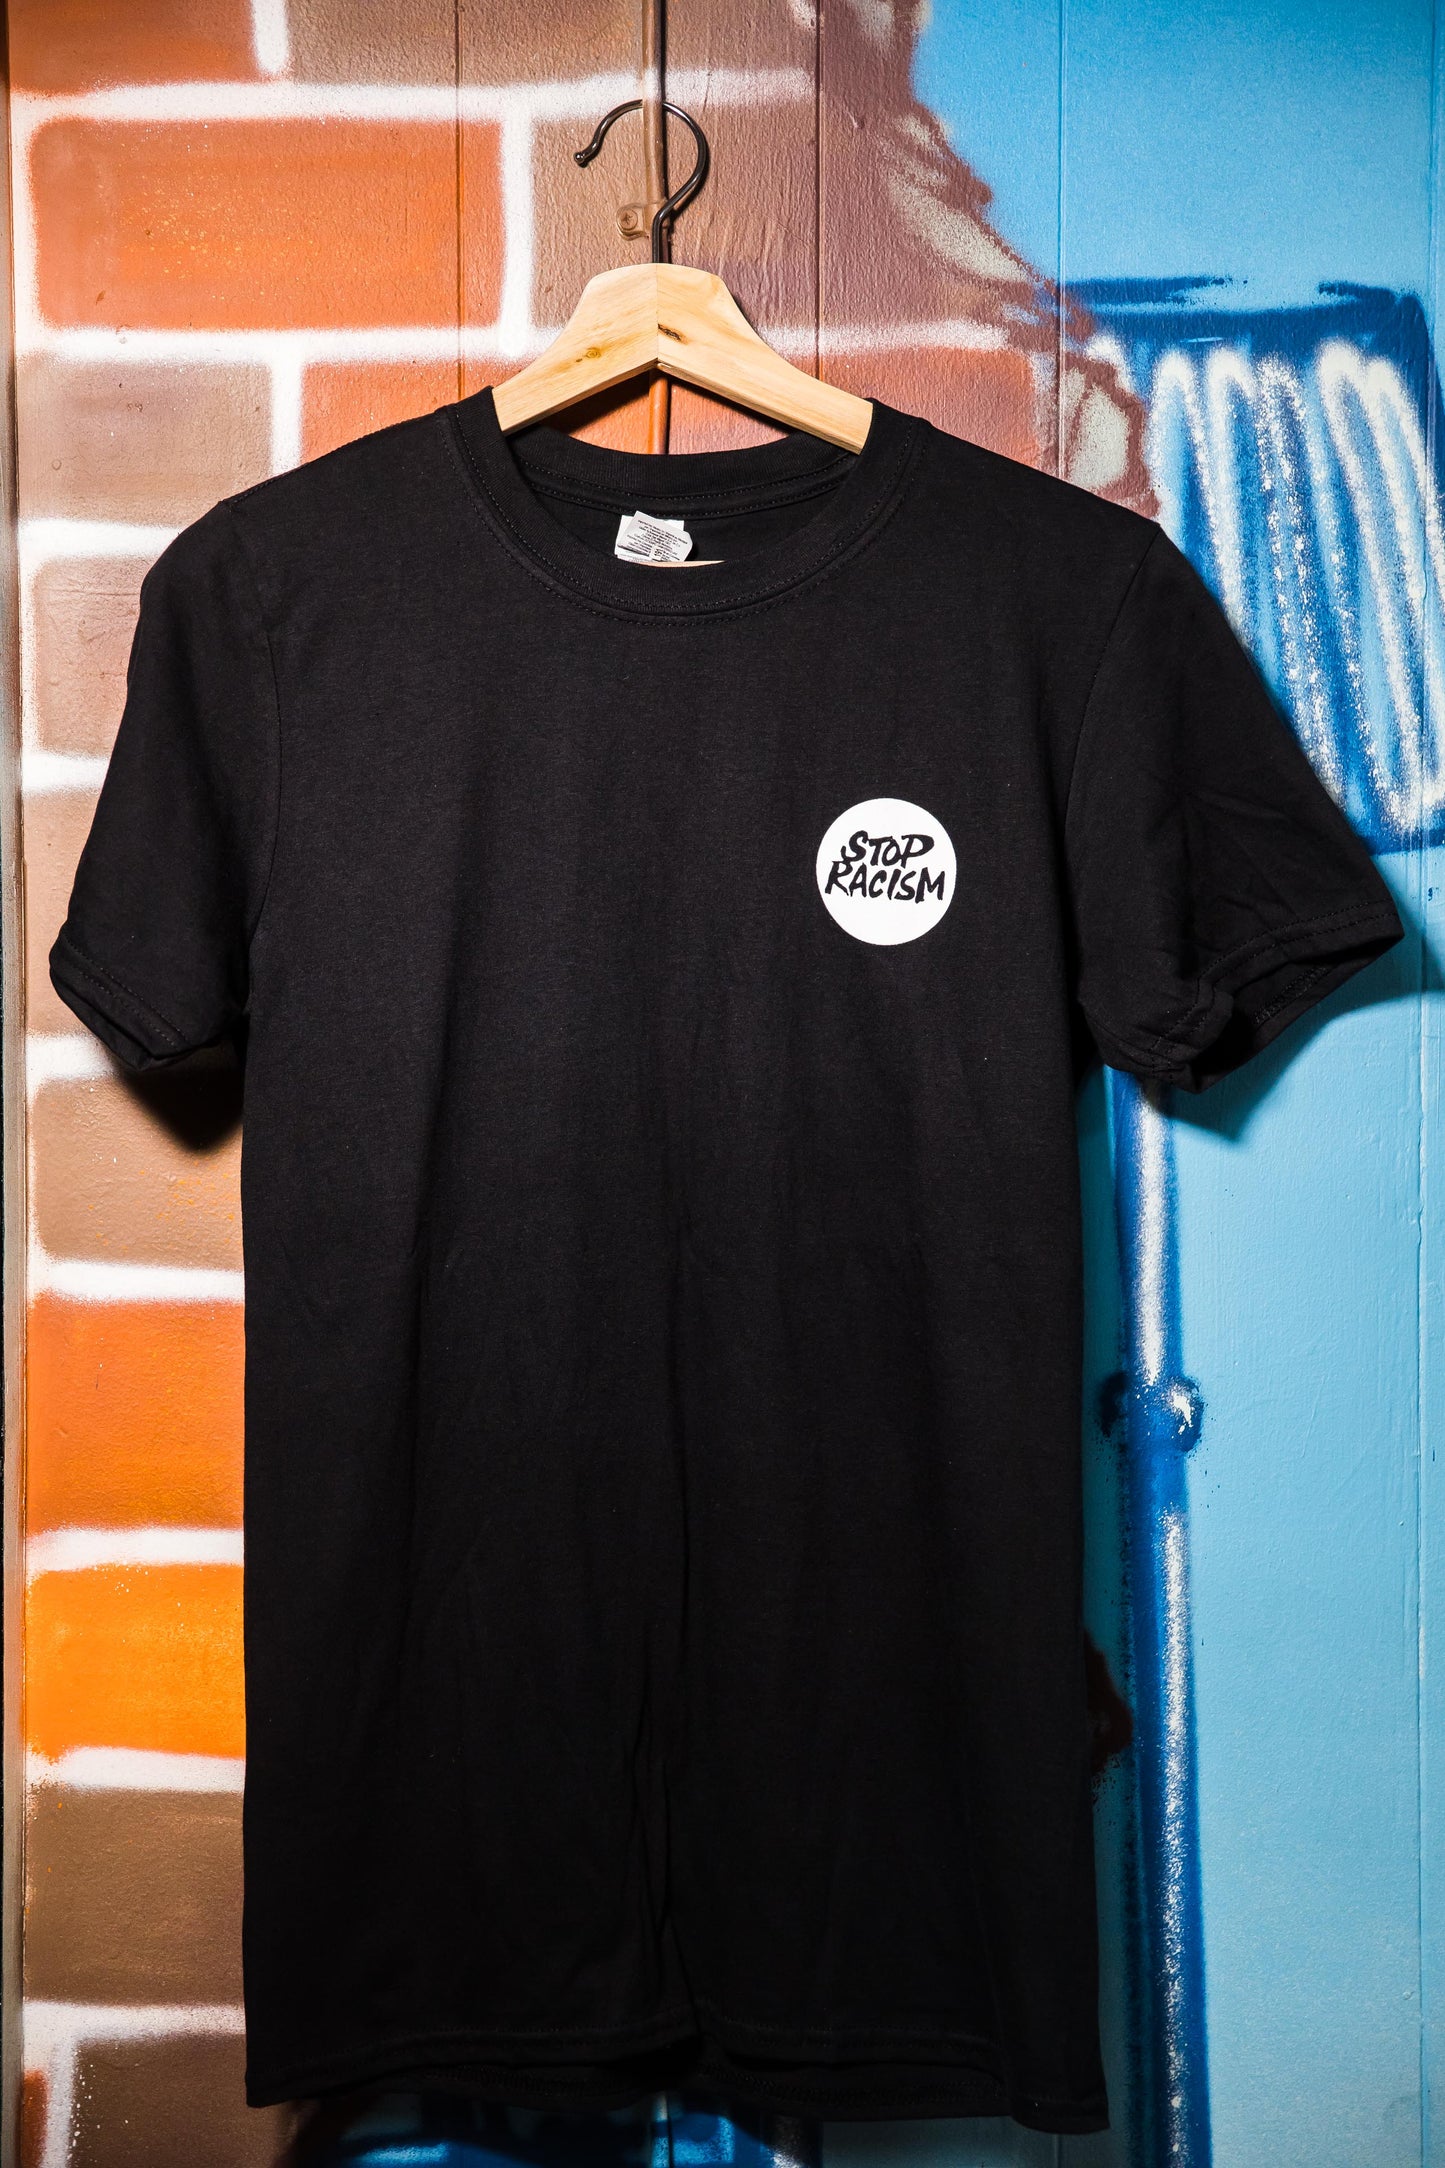 Stop Racism t-shirt (Black) designed by Paul Camo